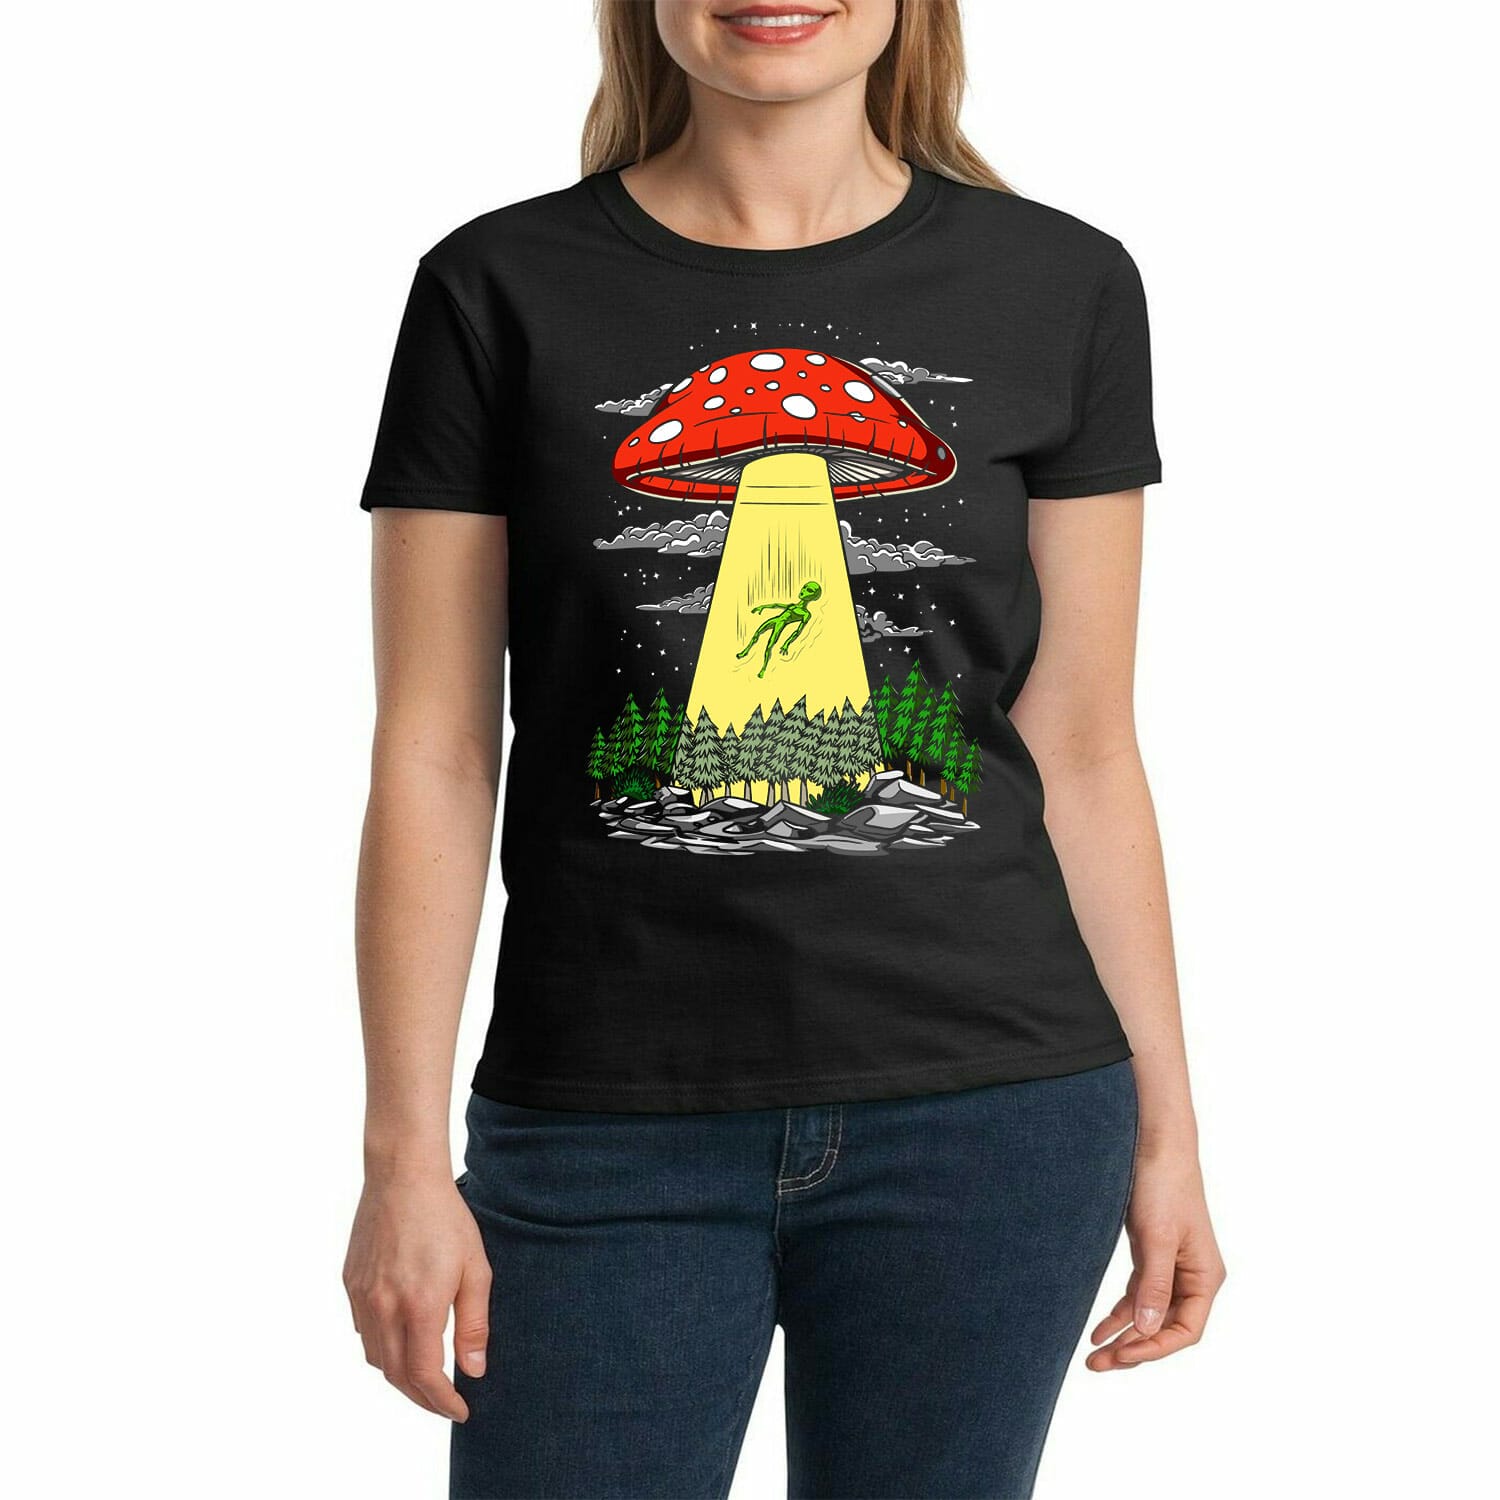 alien abducted by mushroom ufo - funny tshirt design